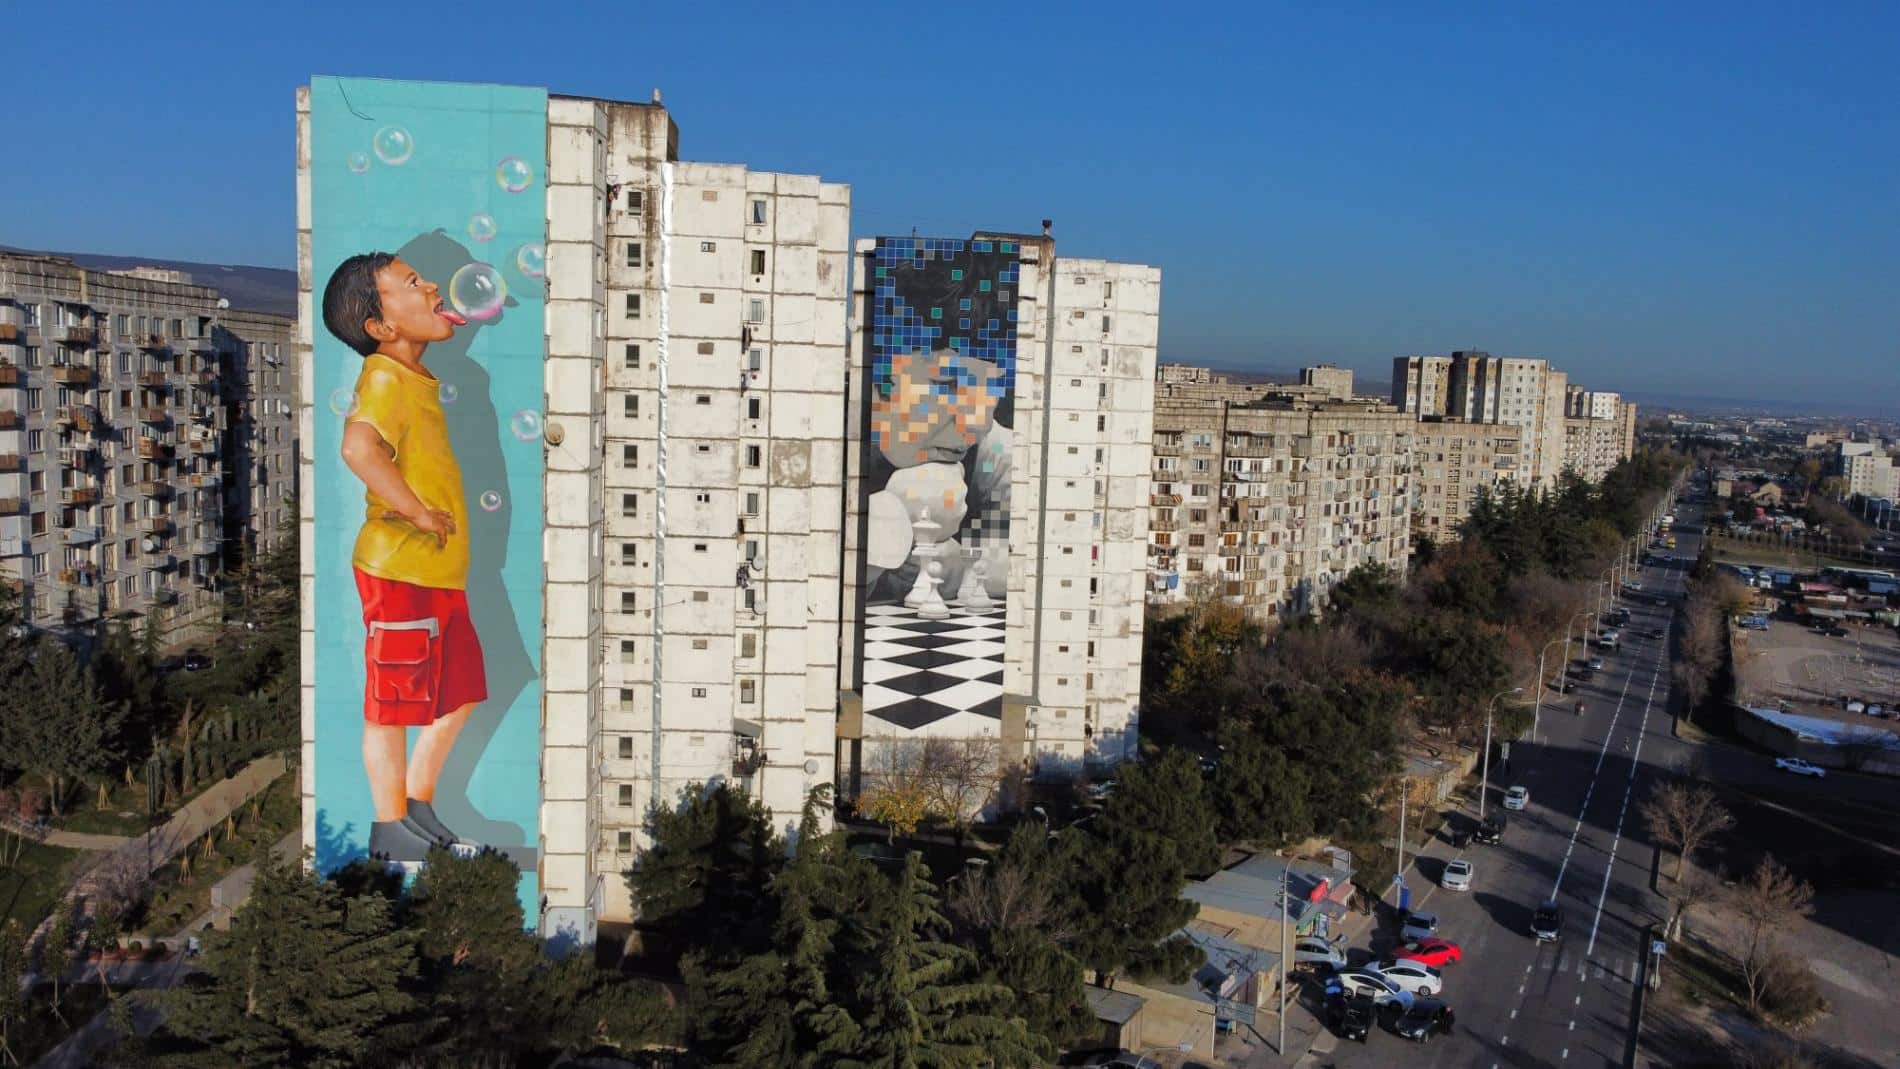 tbilisi mural fest a la dercha mural de niño con burbujas de jabon y al lado izquierdoi mural de pixel Left Kade90. Right David Samkharadze